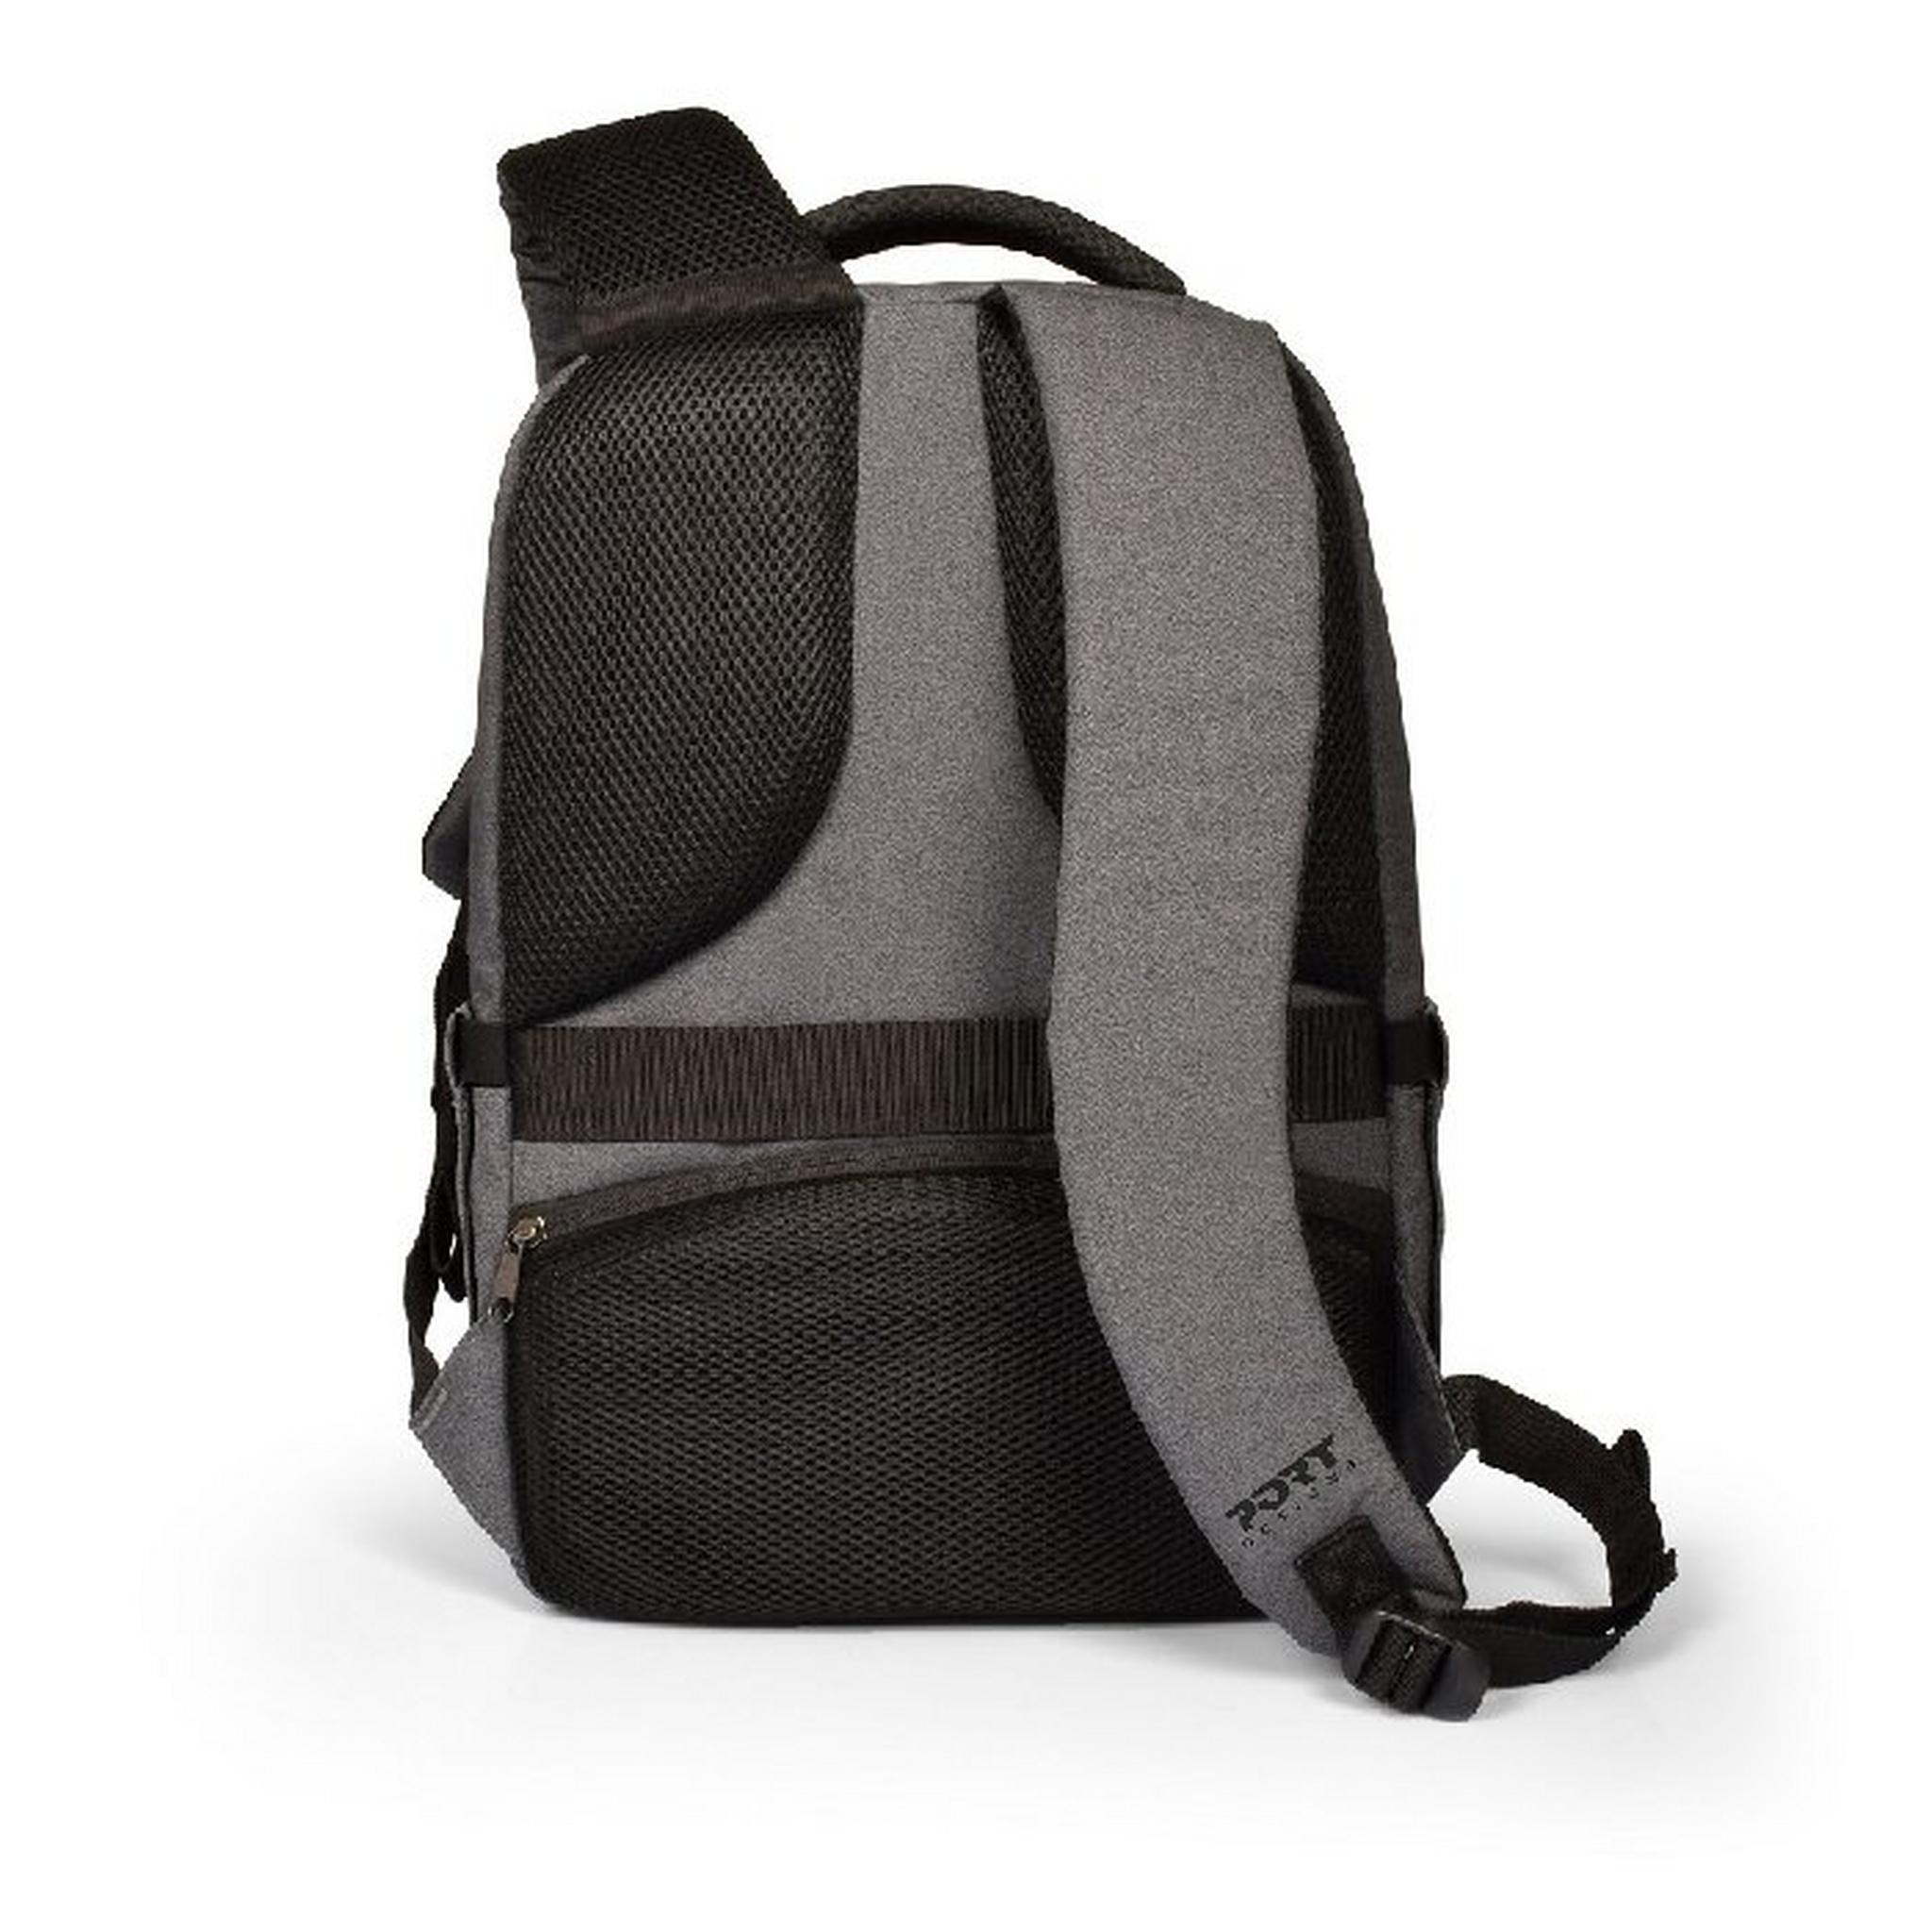 Port Boston laptop Backpack 13-14 inch, 135067 - GREY